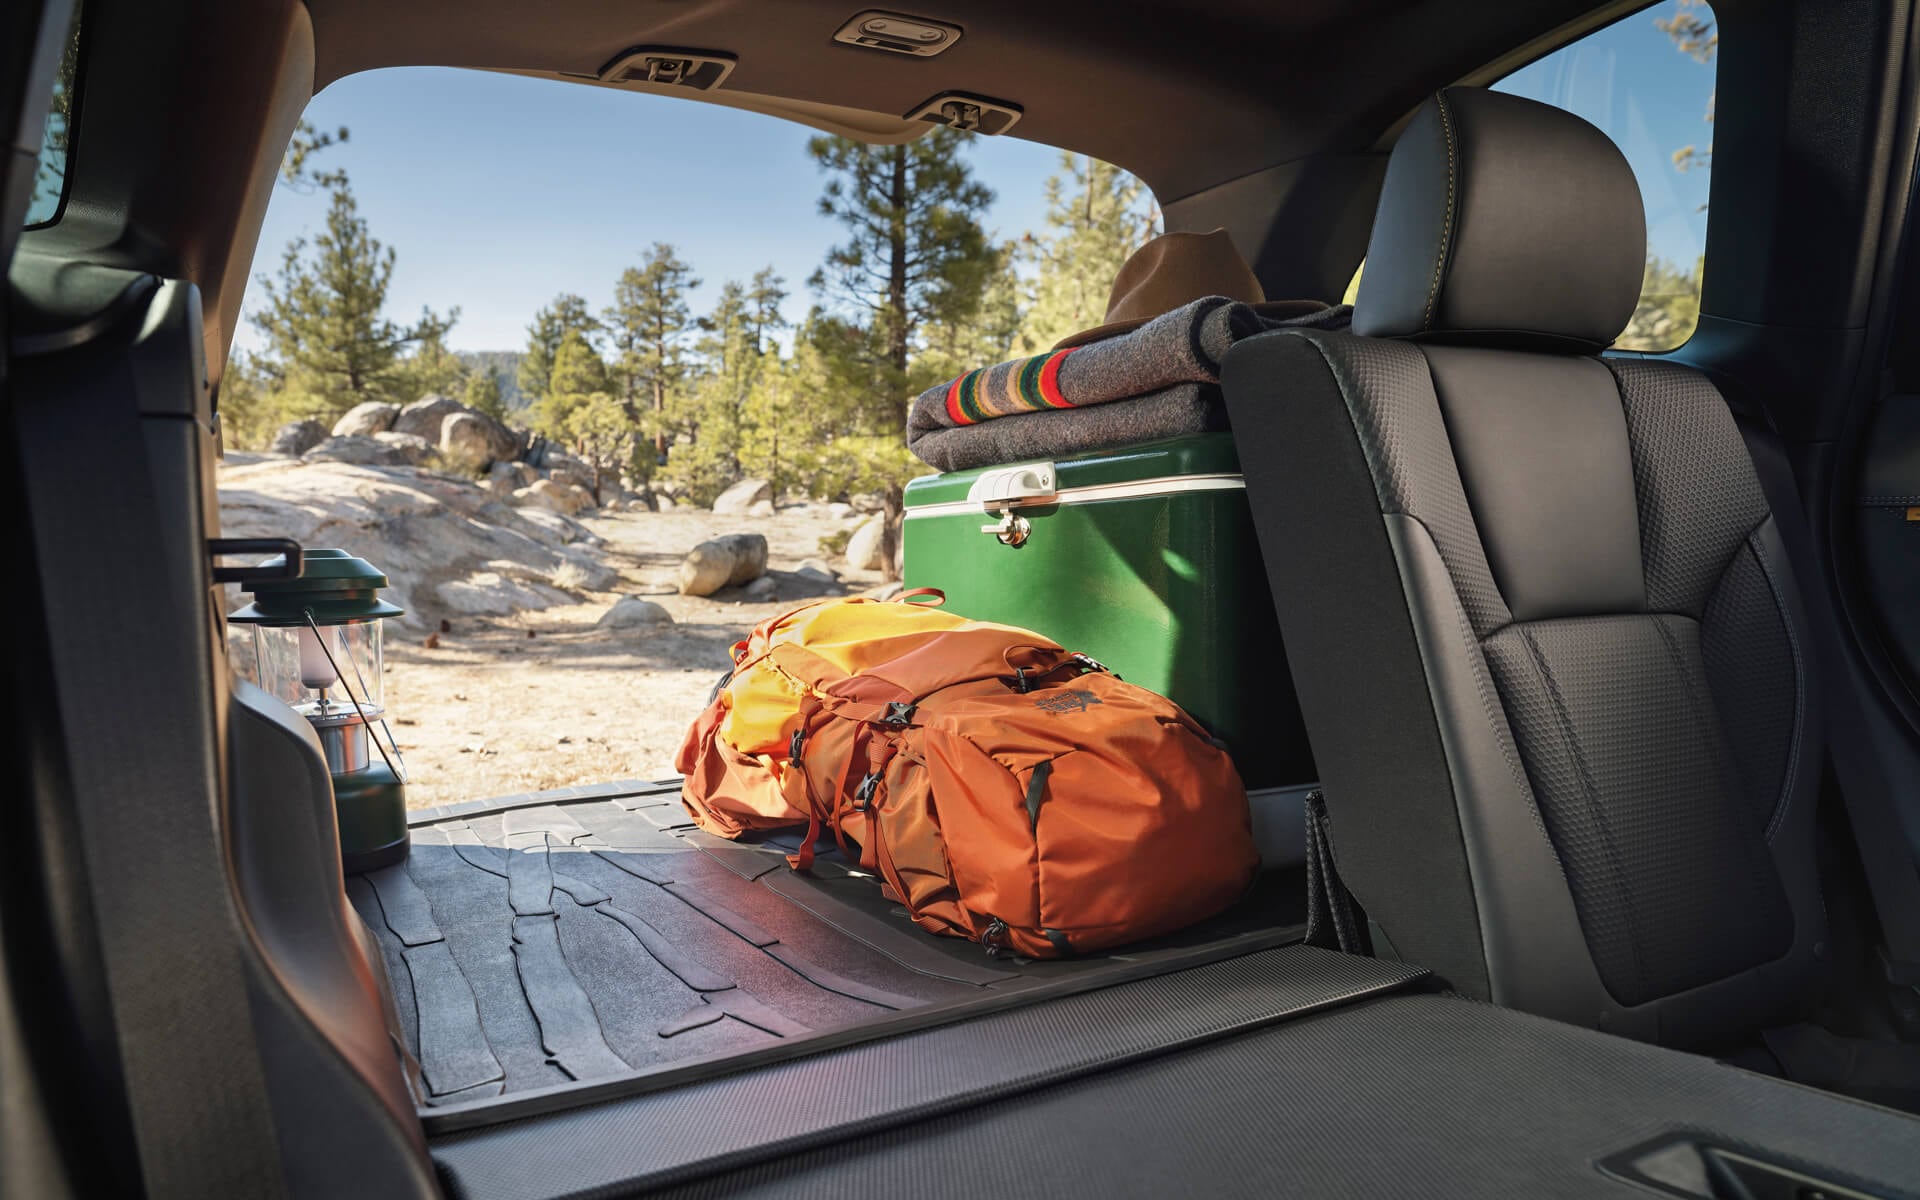 2022 Subaru Forester Wilderness | Sommer's Subaru in Mequon WI